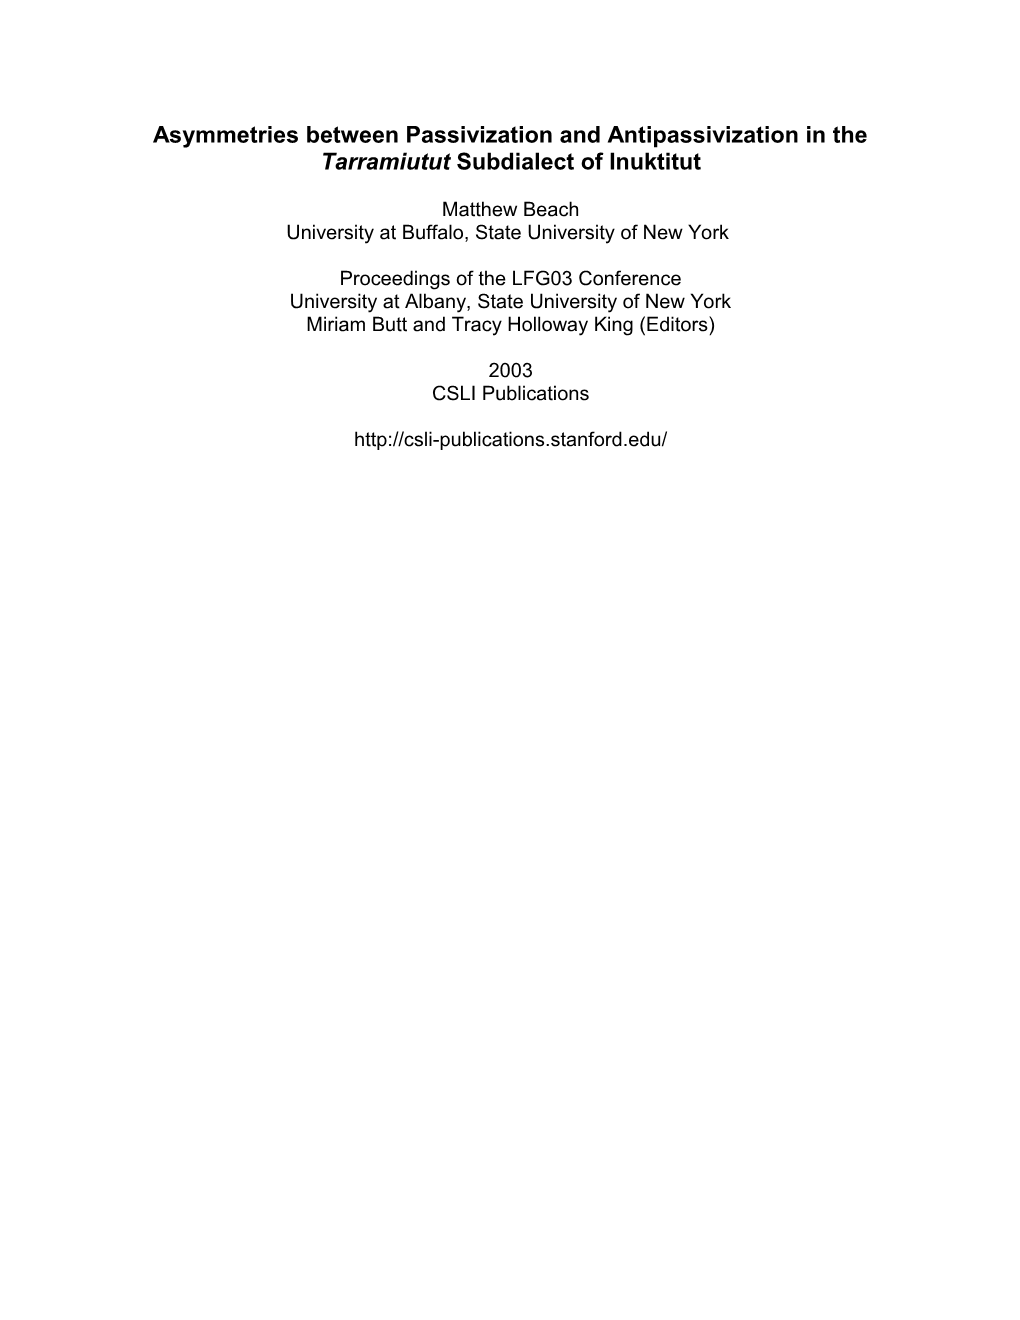 Asymmetries Between Passivization and Antipassivization in the Tarramiutut Subdialect Of